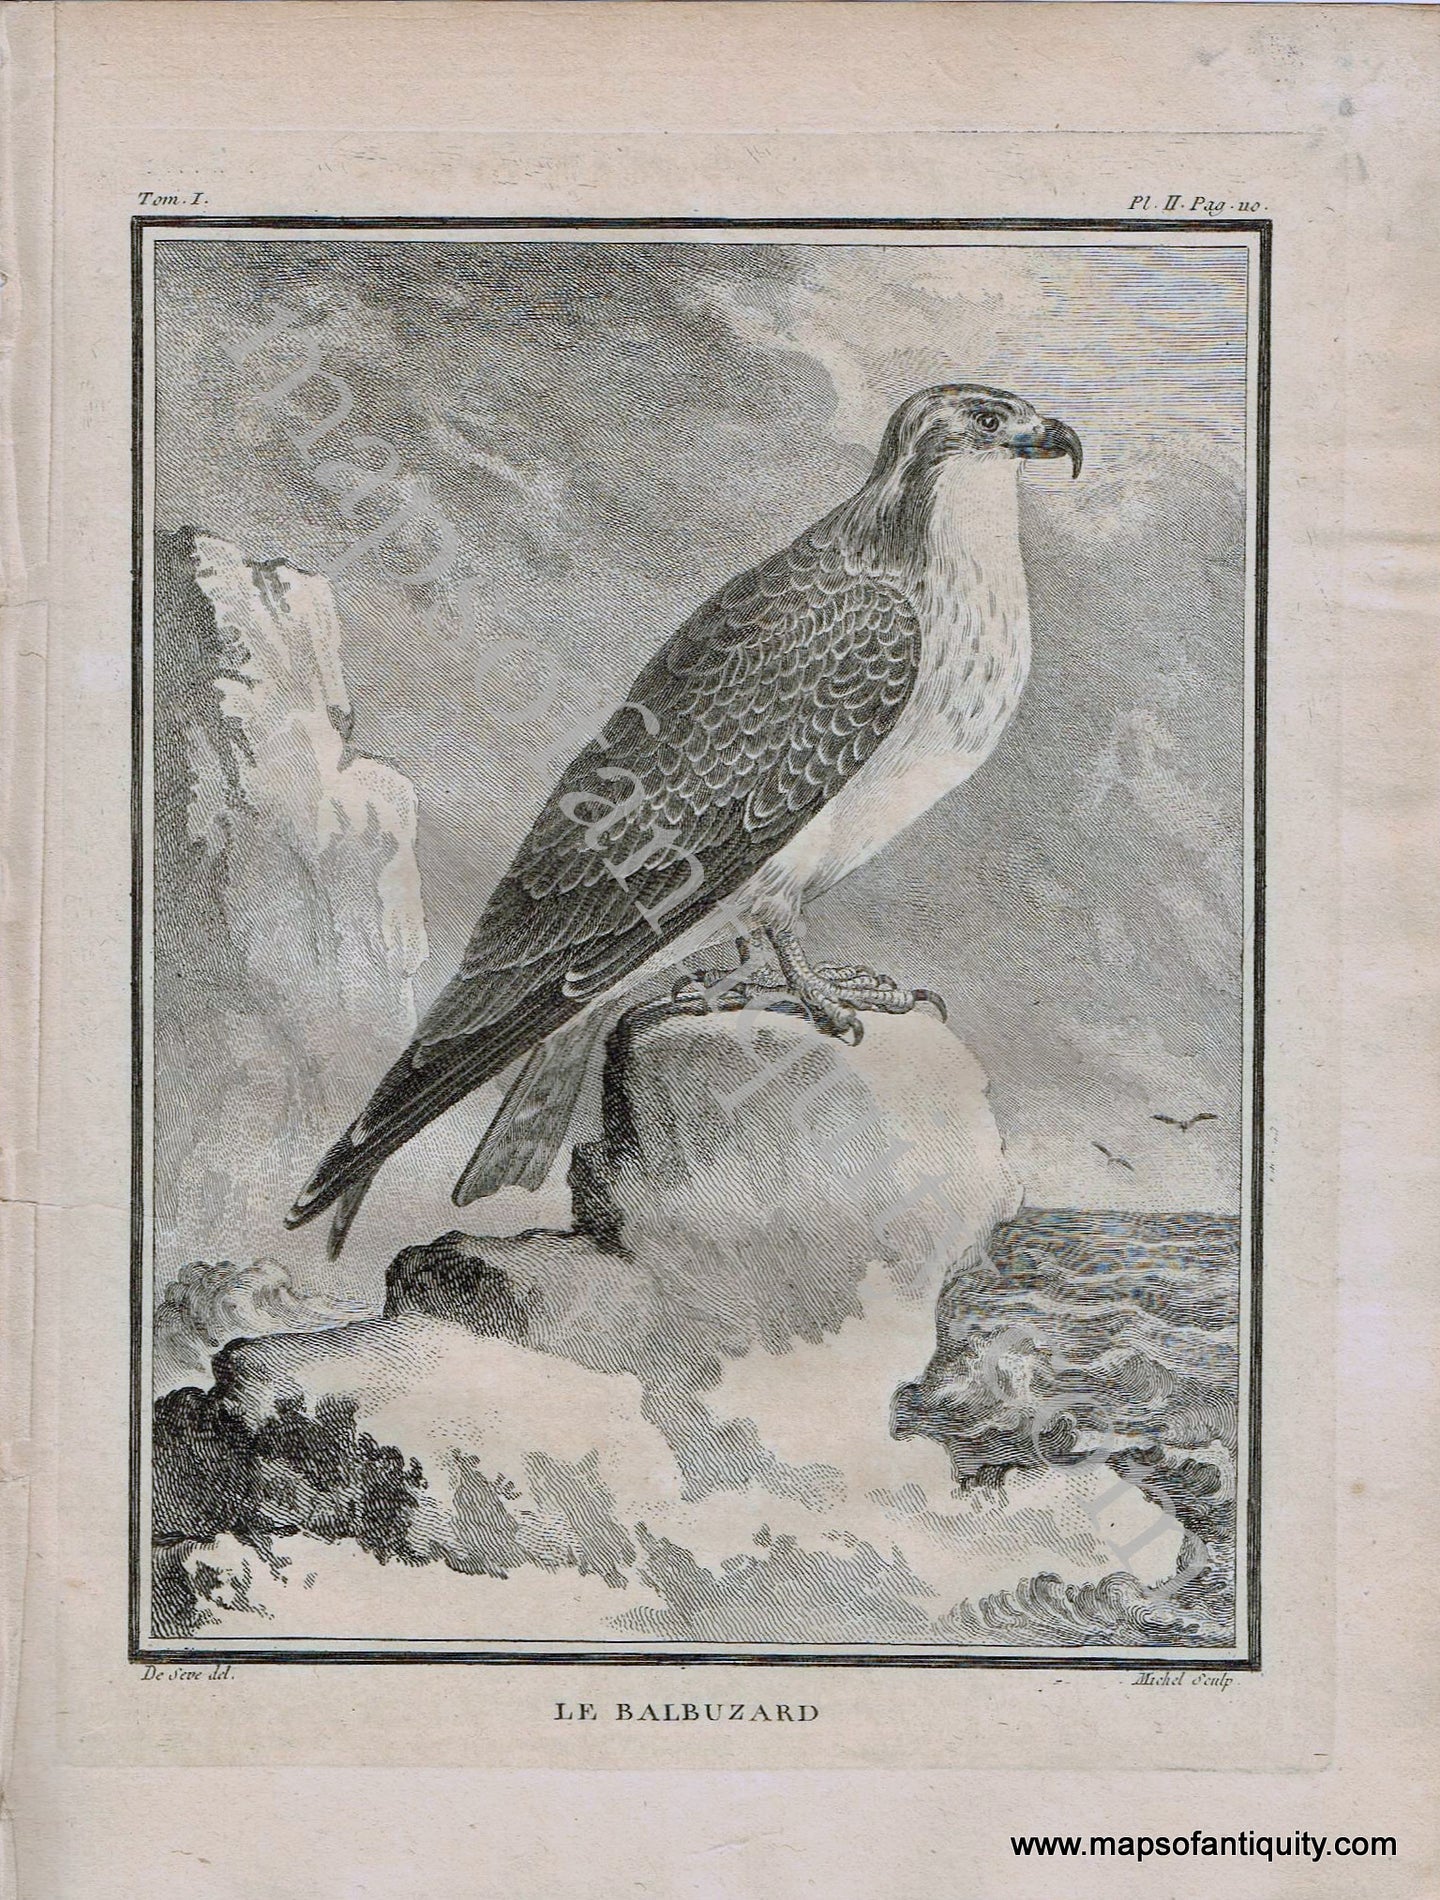 Antique-Black-and-White-Engraved-Illustration-Osprey-Le-Balbuzard-Bird-c.-1770-Buffon-Birds-1800s-19th-century-Maps-of-Antiquity